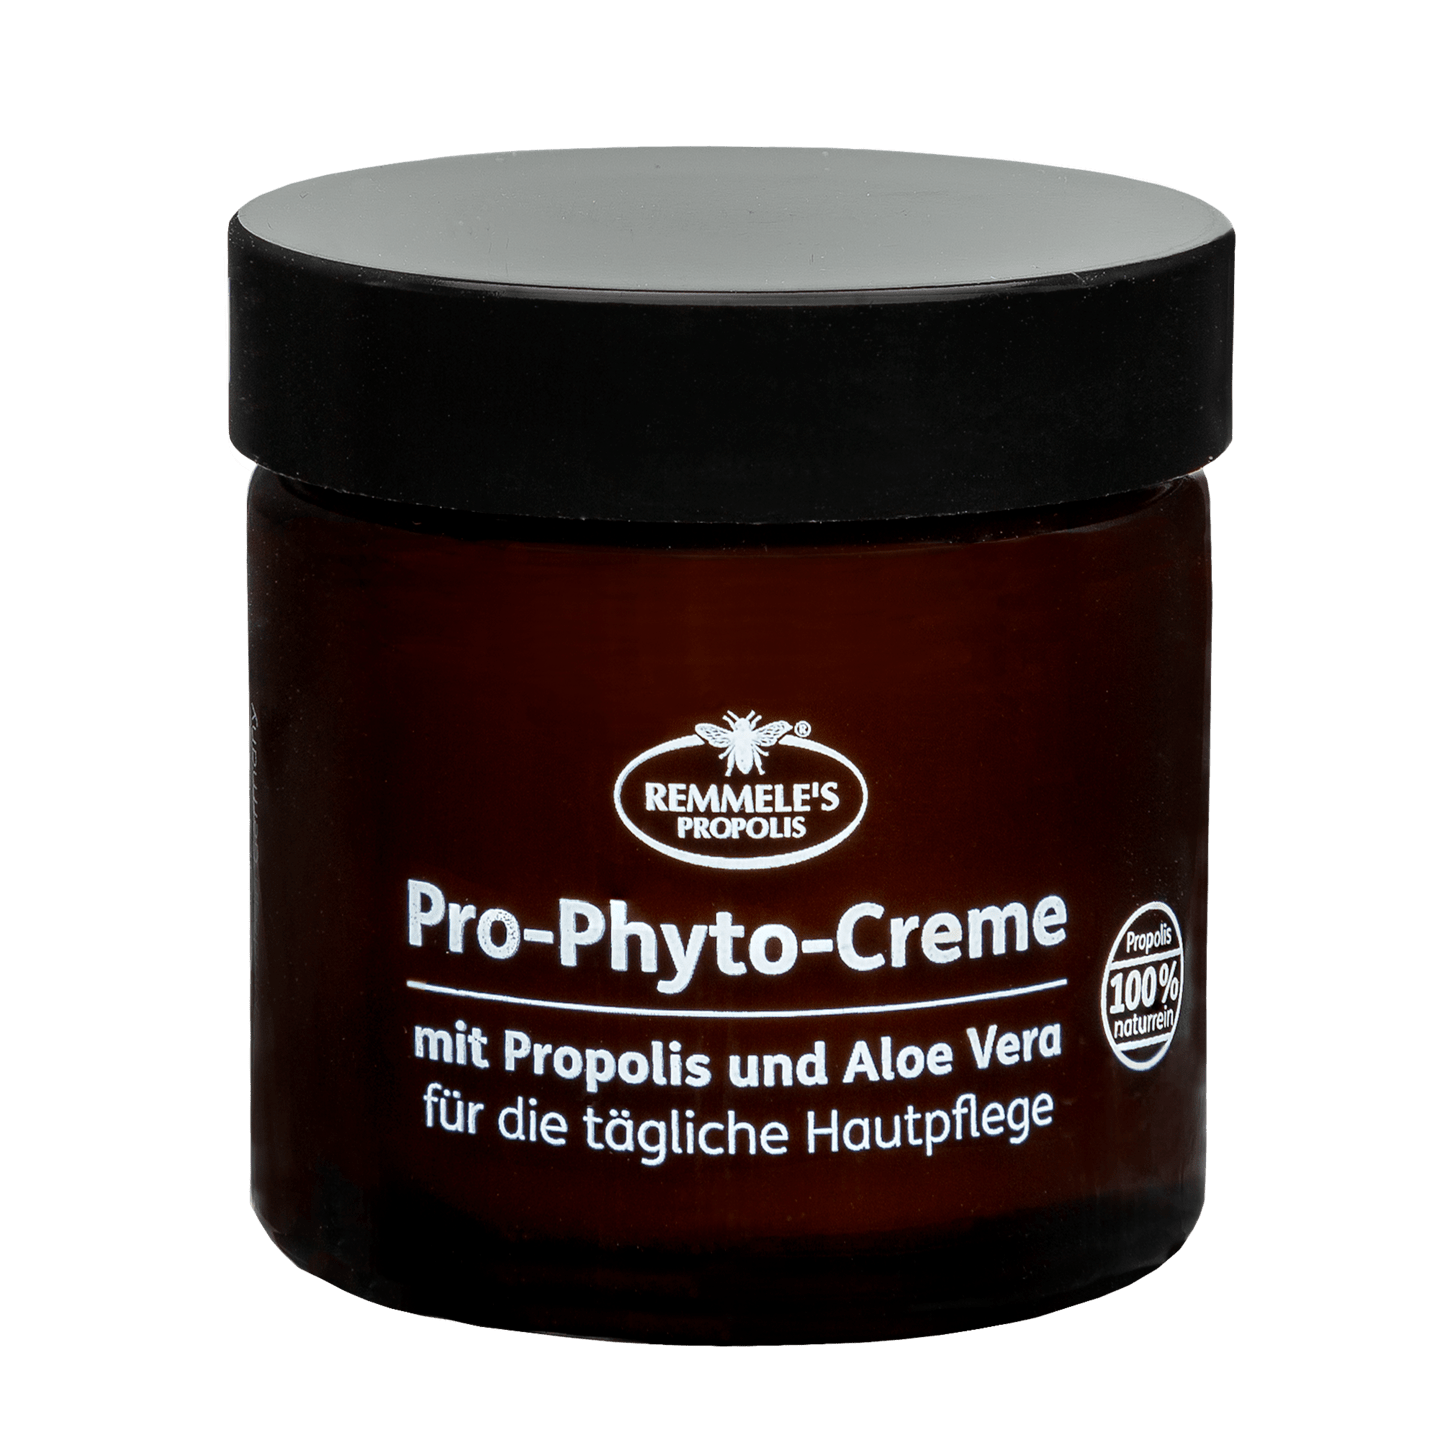 Remmele's Propolis - Pro-Phyto-Creme, 60 ml